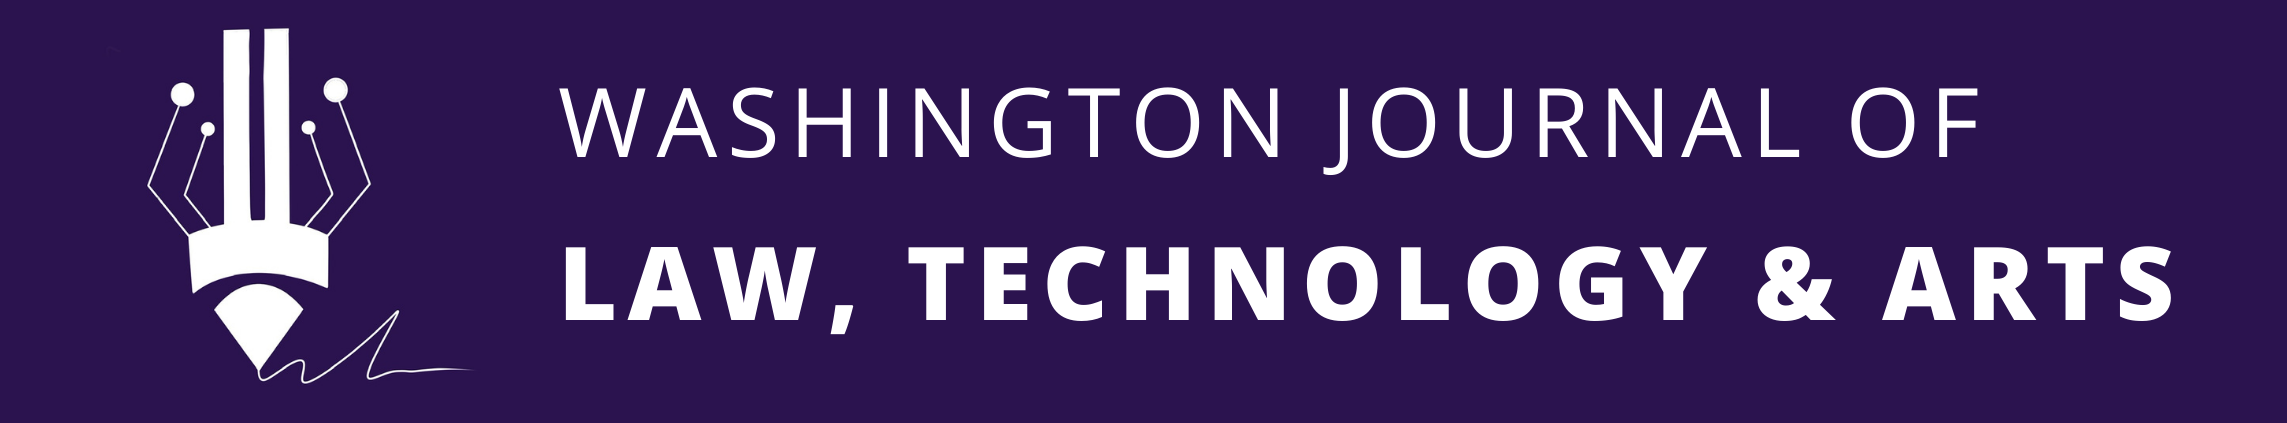 Washington Journal of Law, Technology & Arts